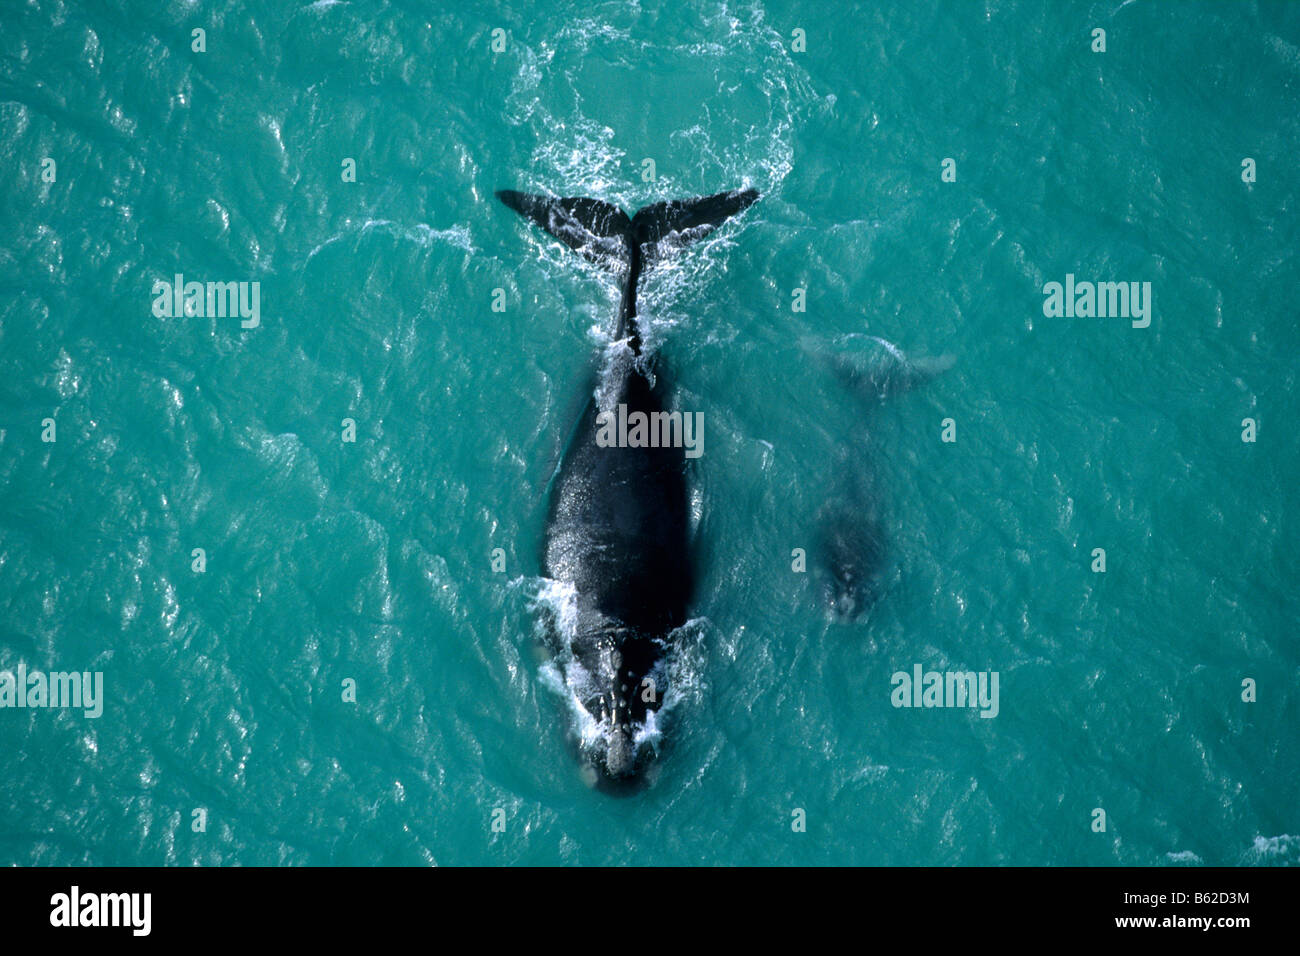 Southern Right Whale (Balaena glacialis australis, Eubalaena australis), mother and calf, aerial view. Stock Photo